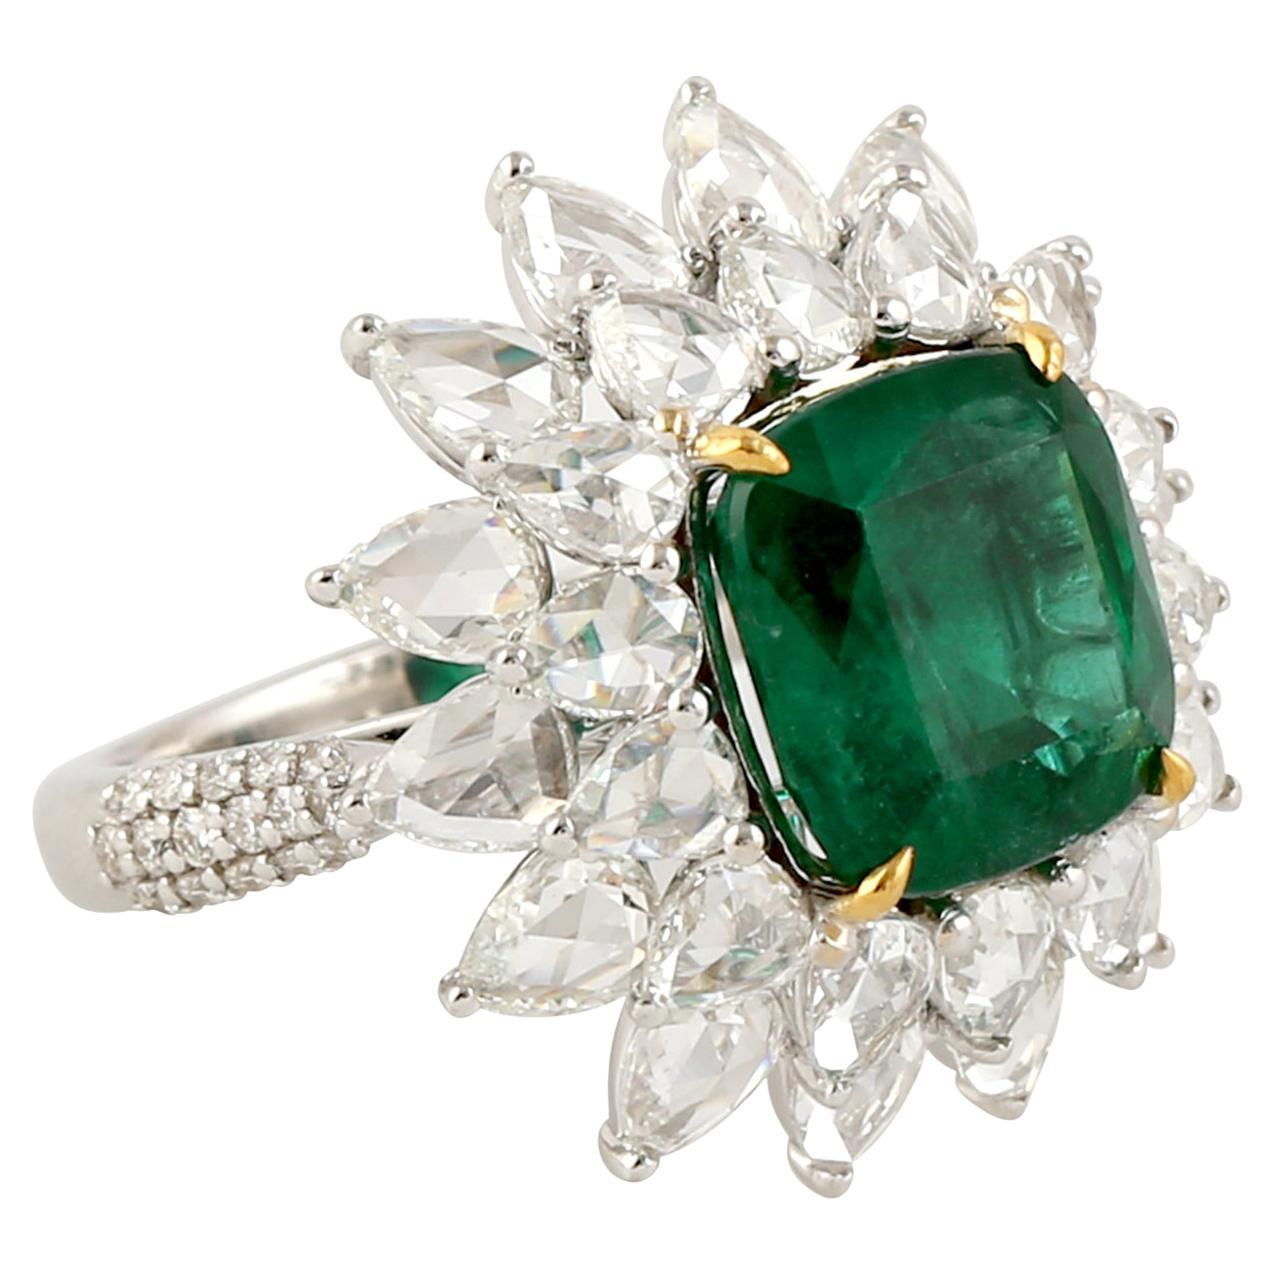 Designer Emerald and White Diamond Ring in 18K white Gold